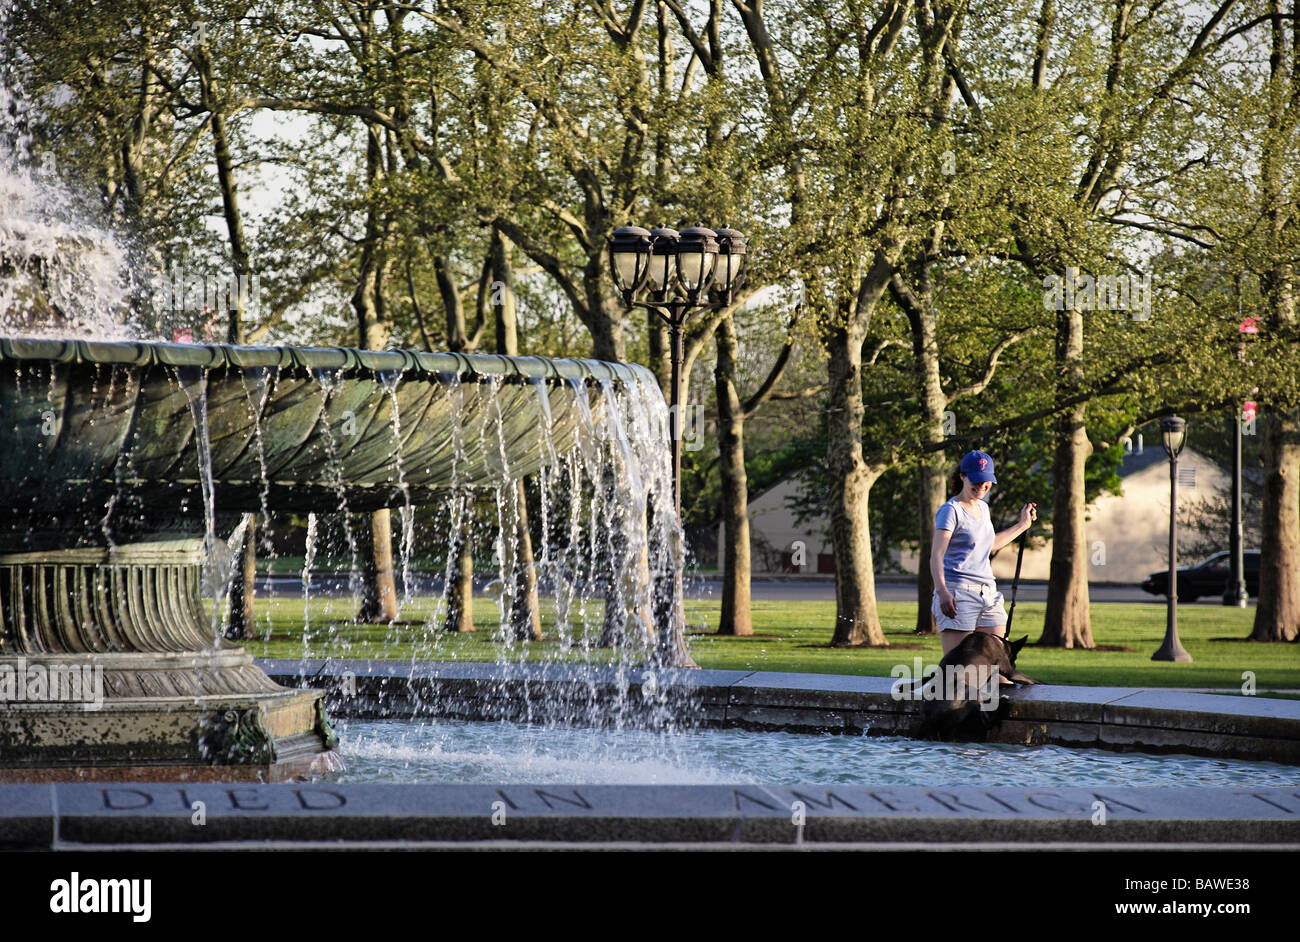 Dog and owner enjoy the cool fountain water in Fairmont Park Philadelphia Pennsylvania PA Stock Photo